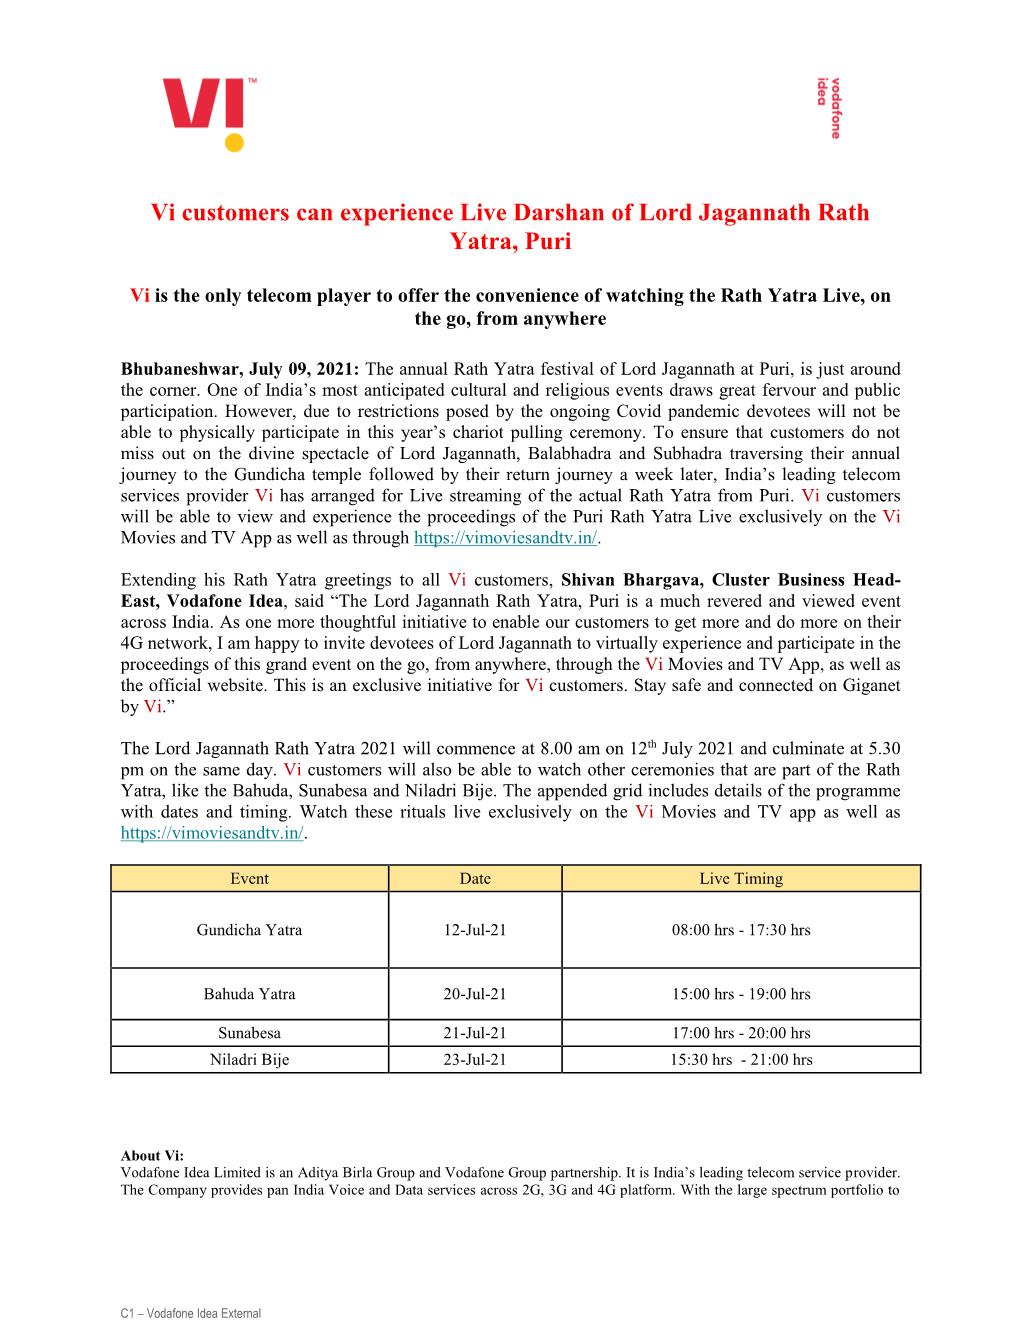 Vi Customers Can Experience Live Darshan of Lord Jagannath Rath Yatra, Puri